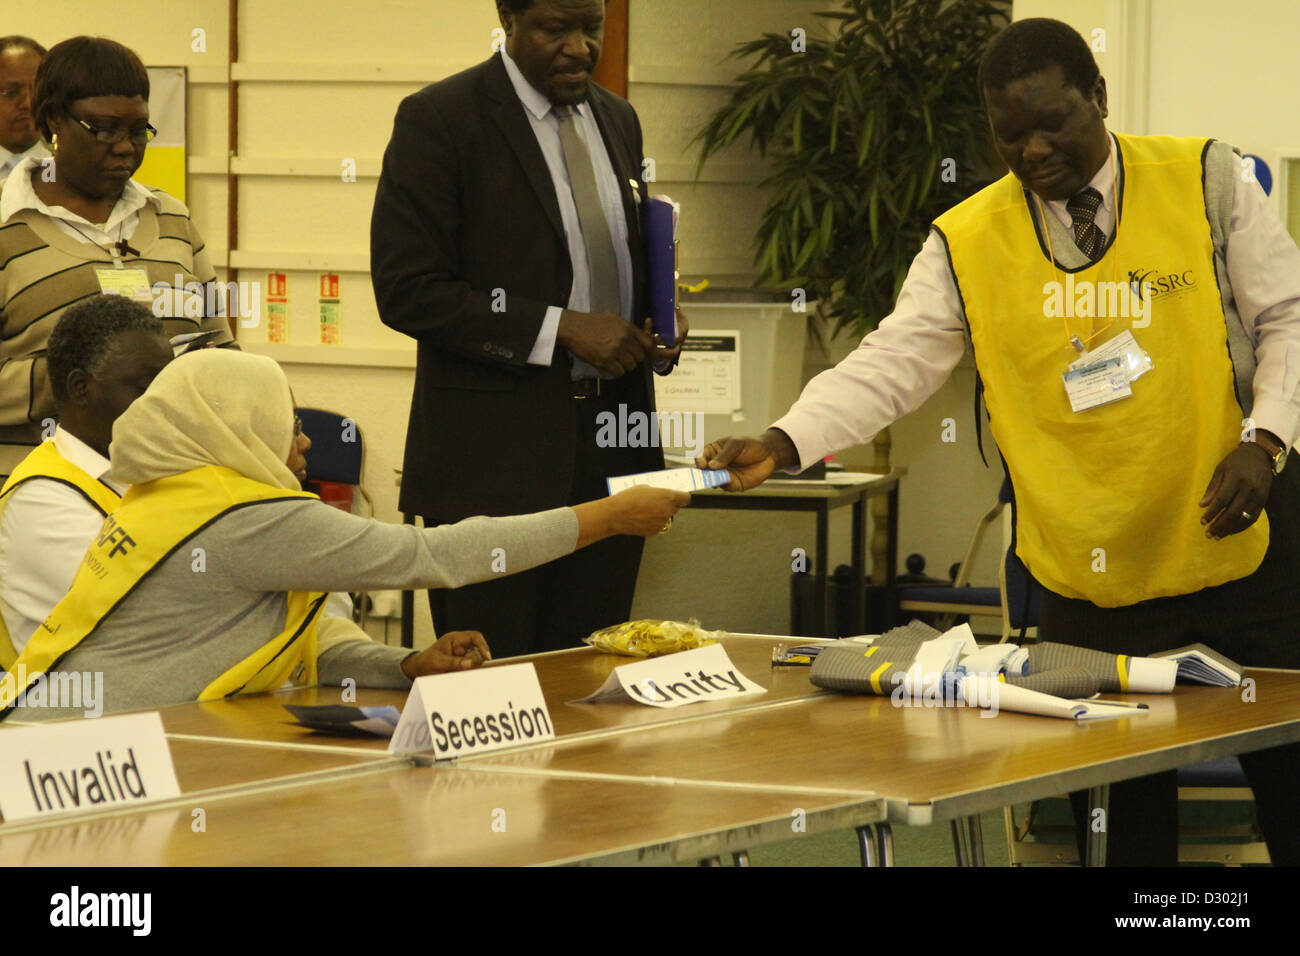 Süd-Sudan Referendum, London Wahllokal, Januar 2011 Stockfoto